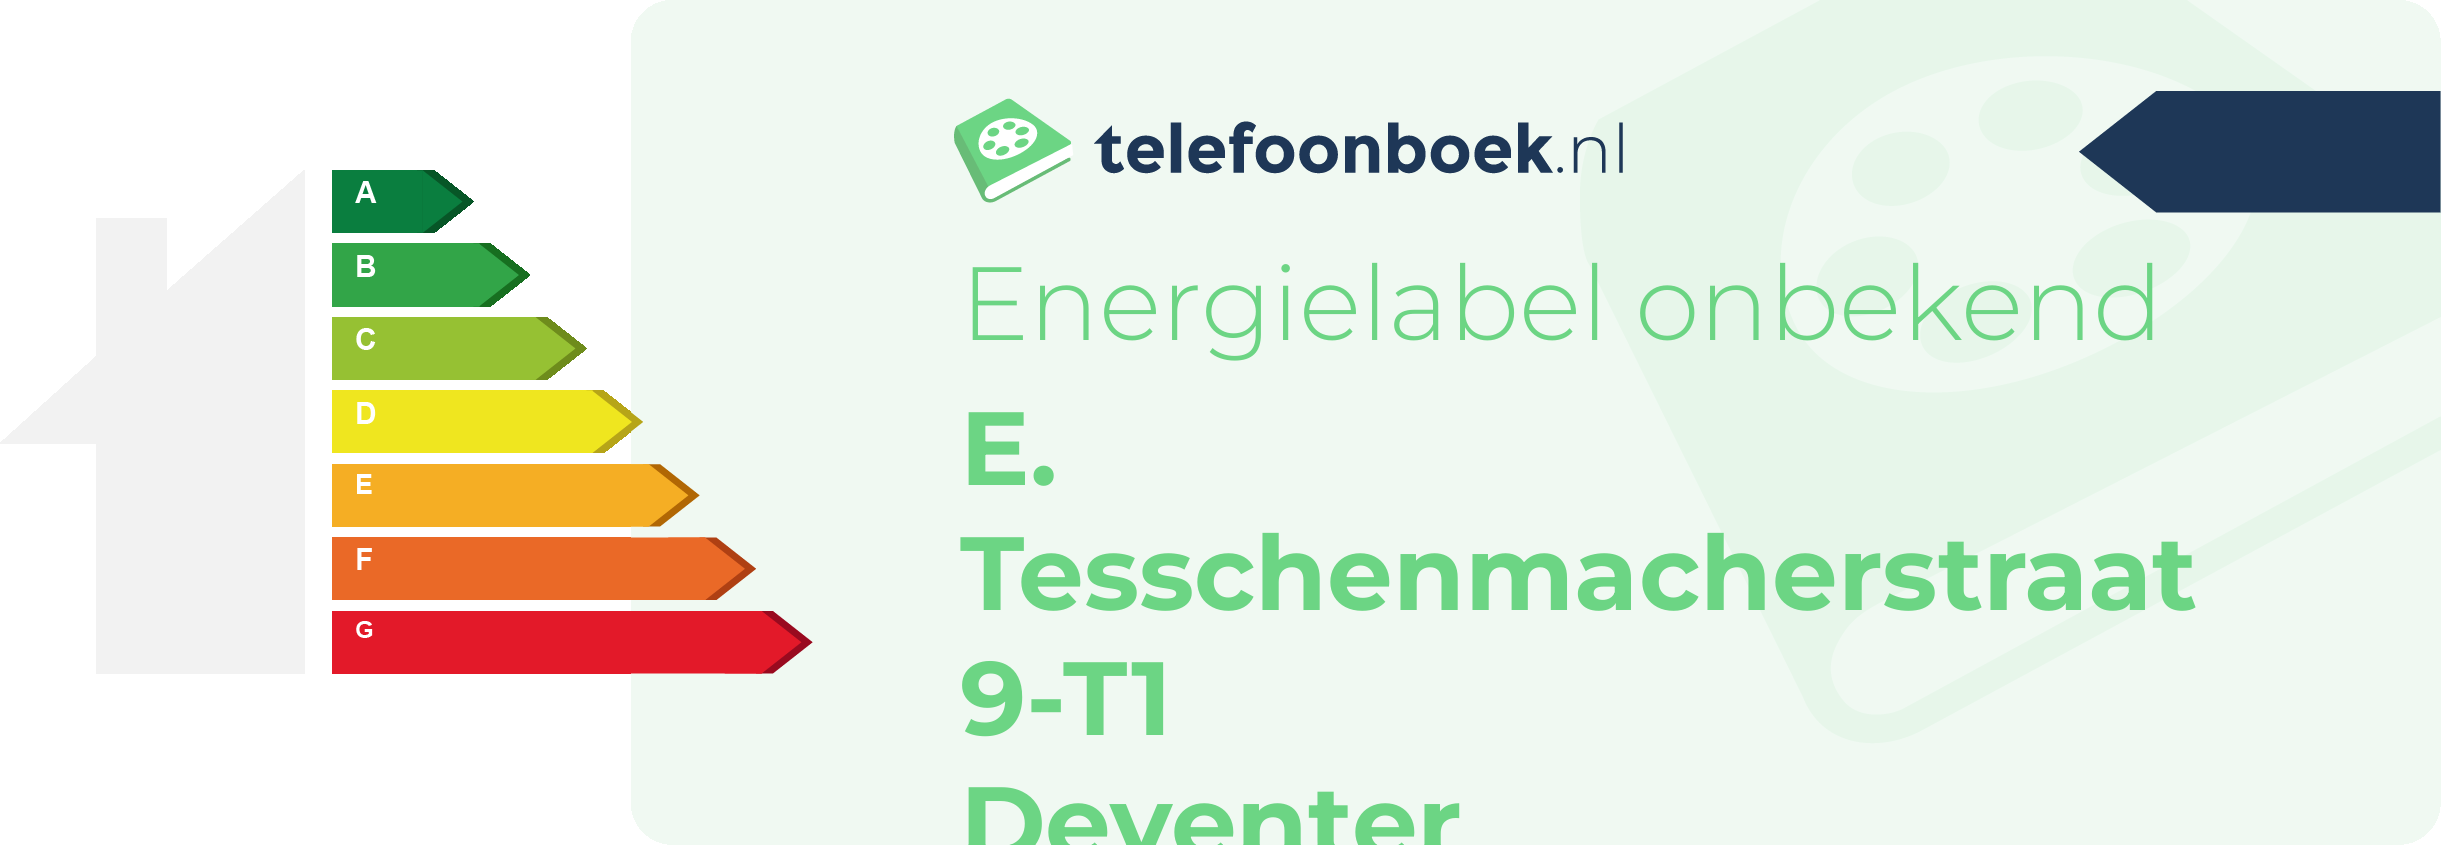 Energielabel E. Tesschenmacherstraat 9-T1 Deventer